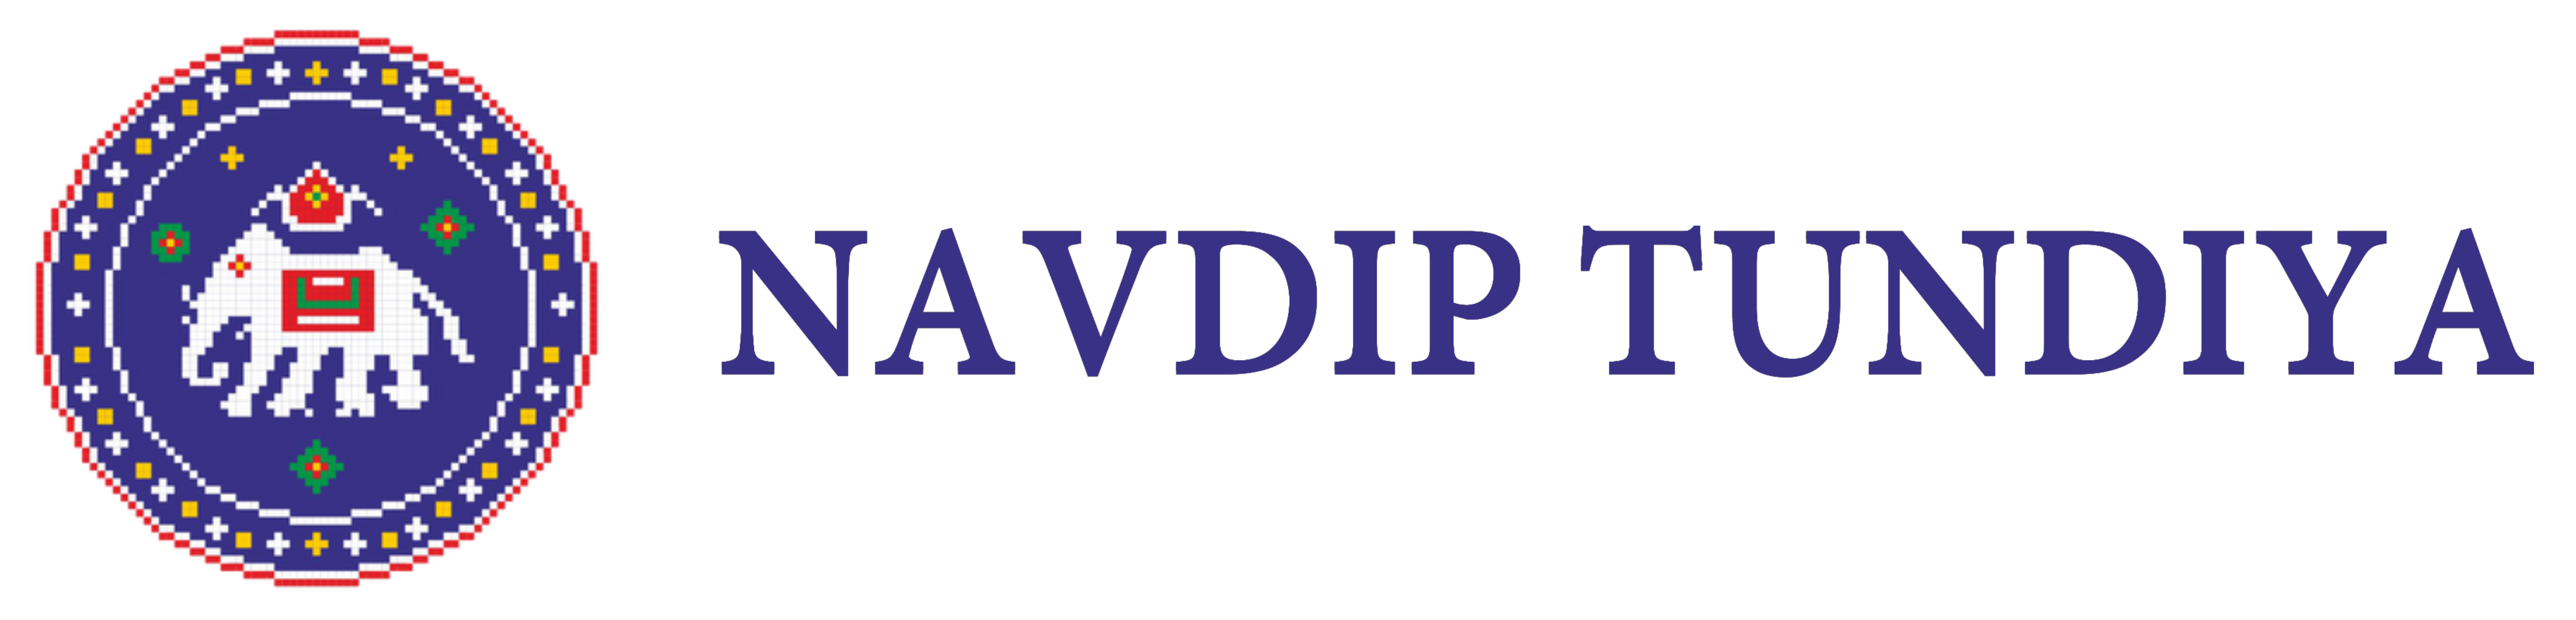 NAVDIP TUNDIYA : Brand Short Description Type Here.